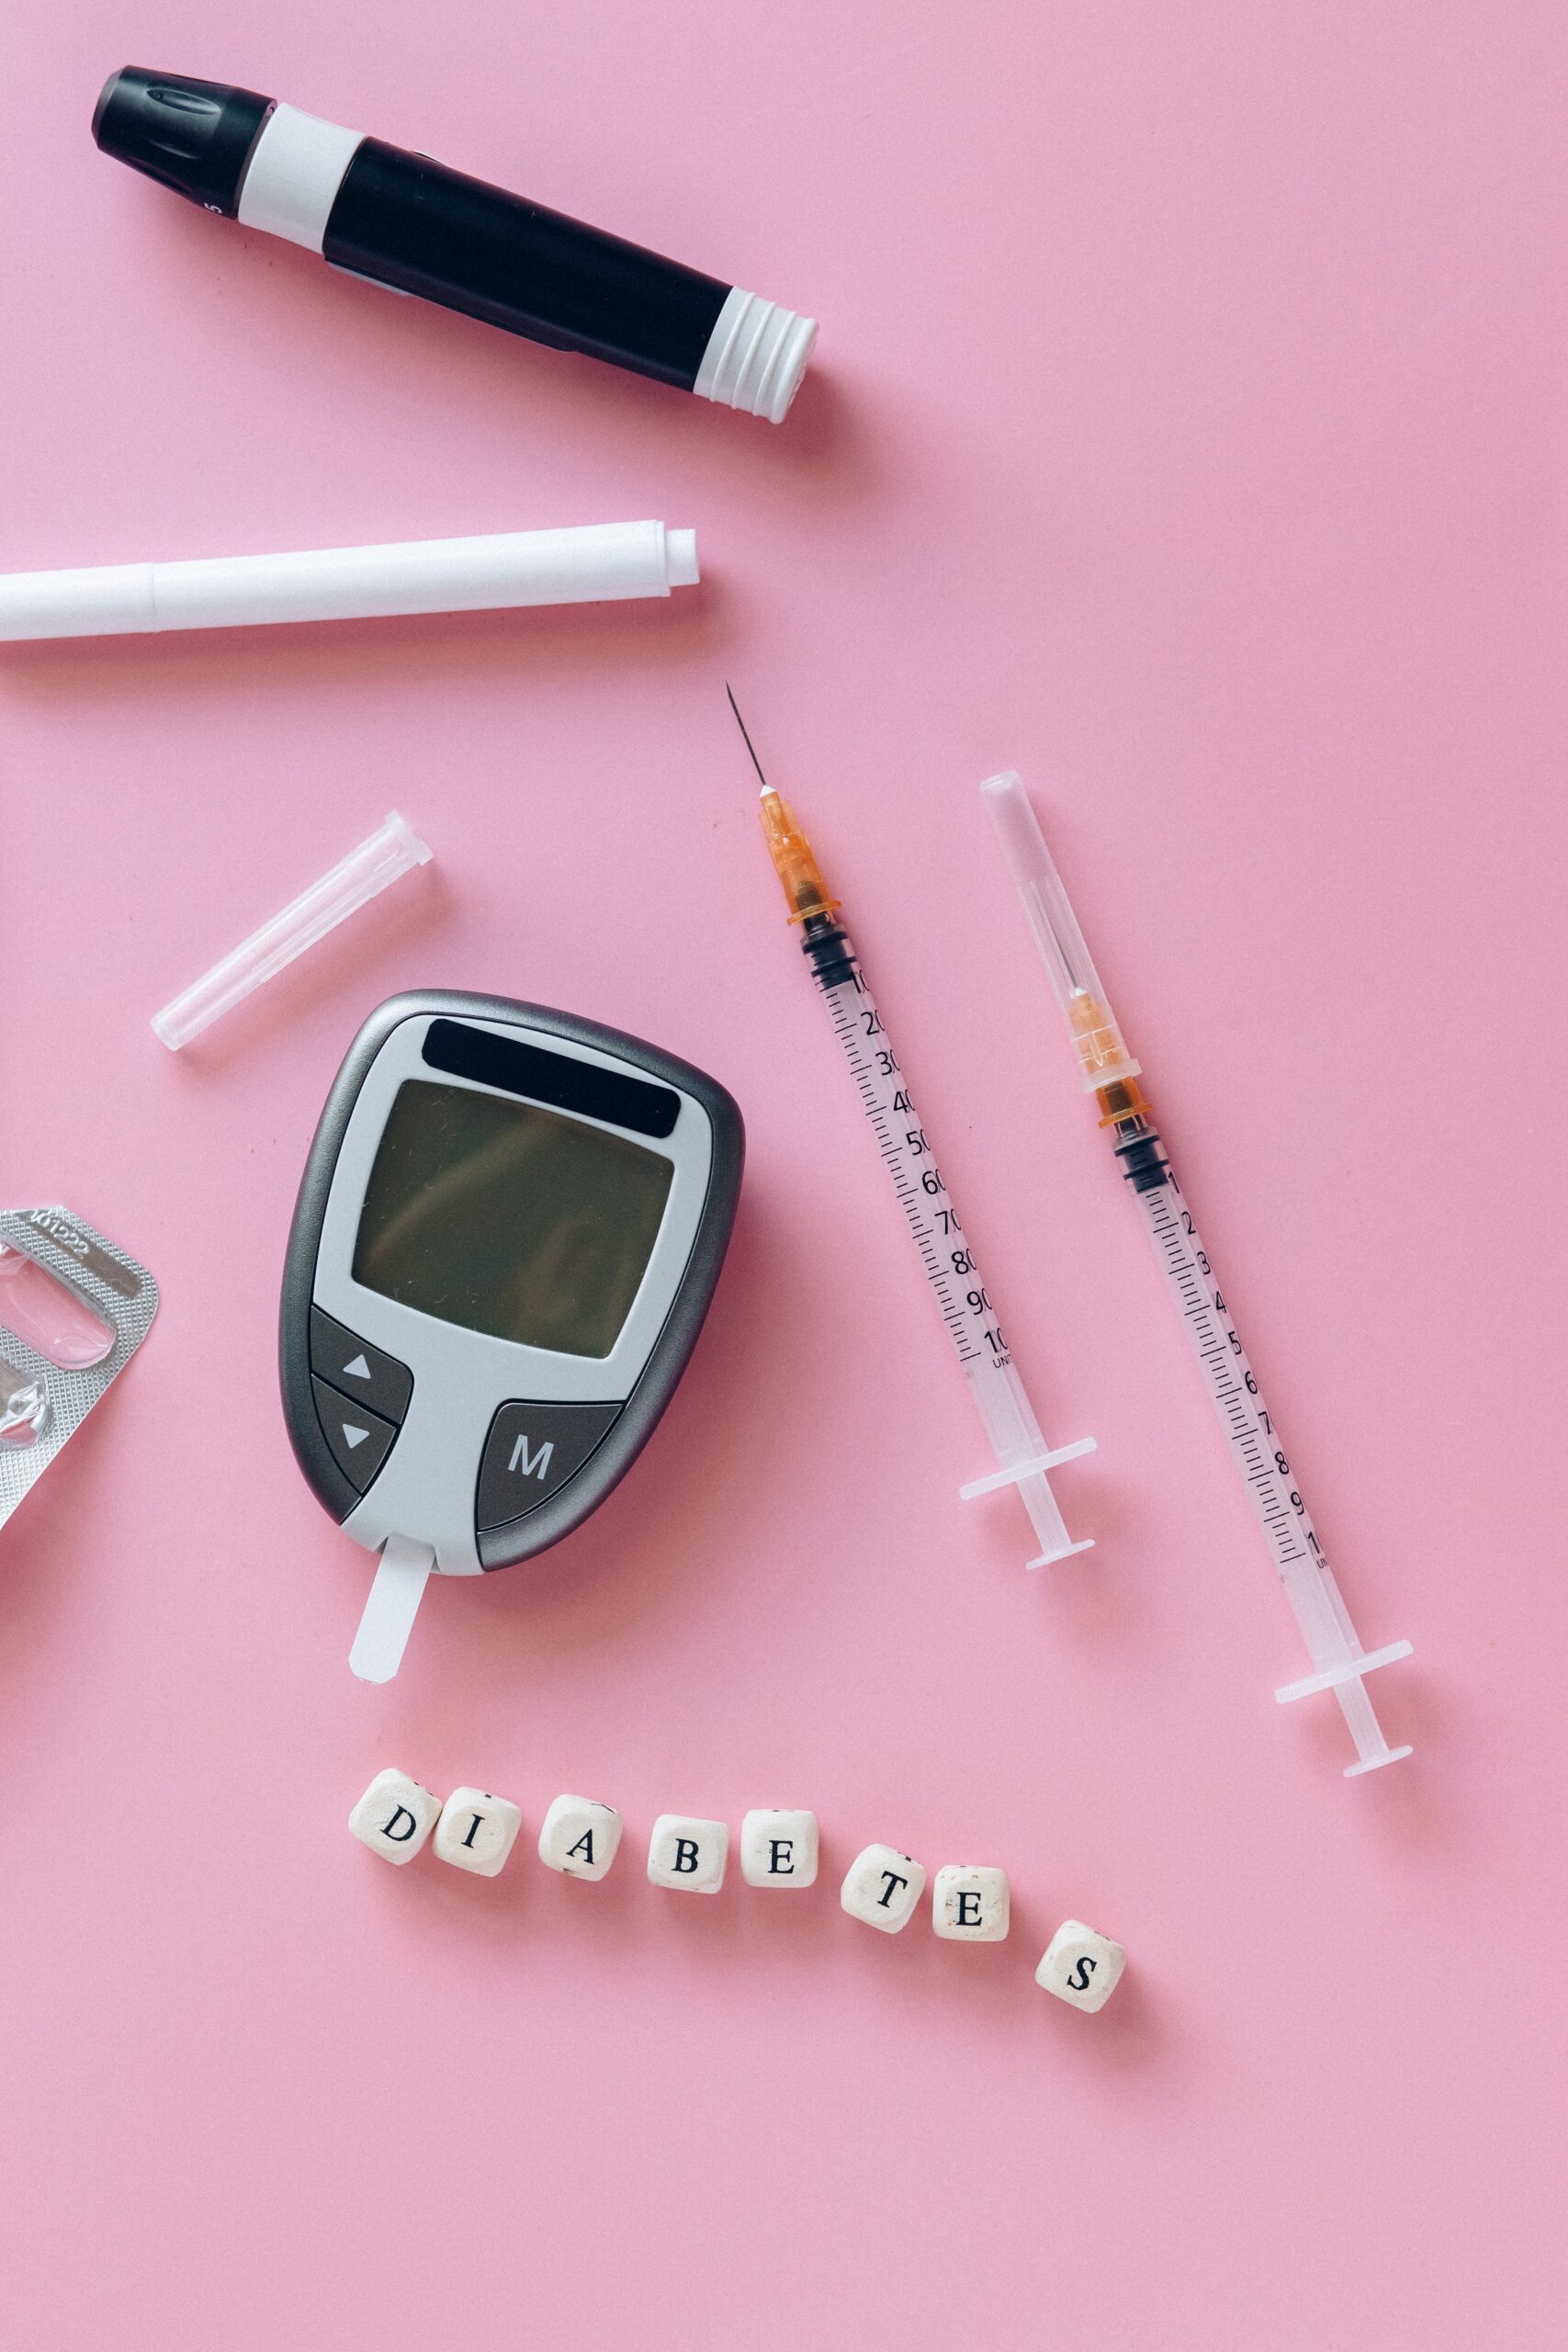 diabetes glucose meter